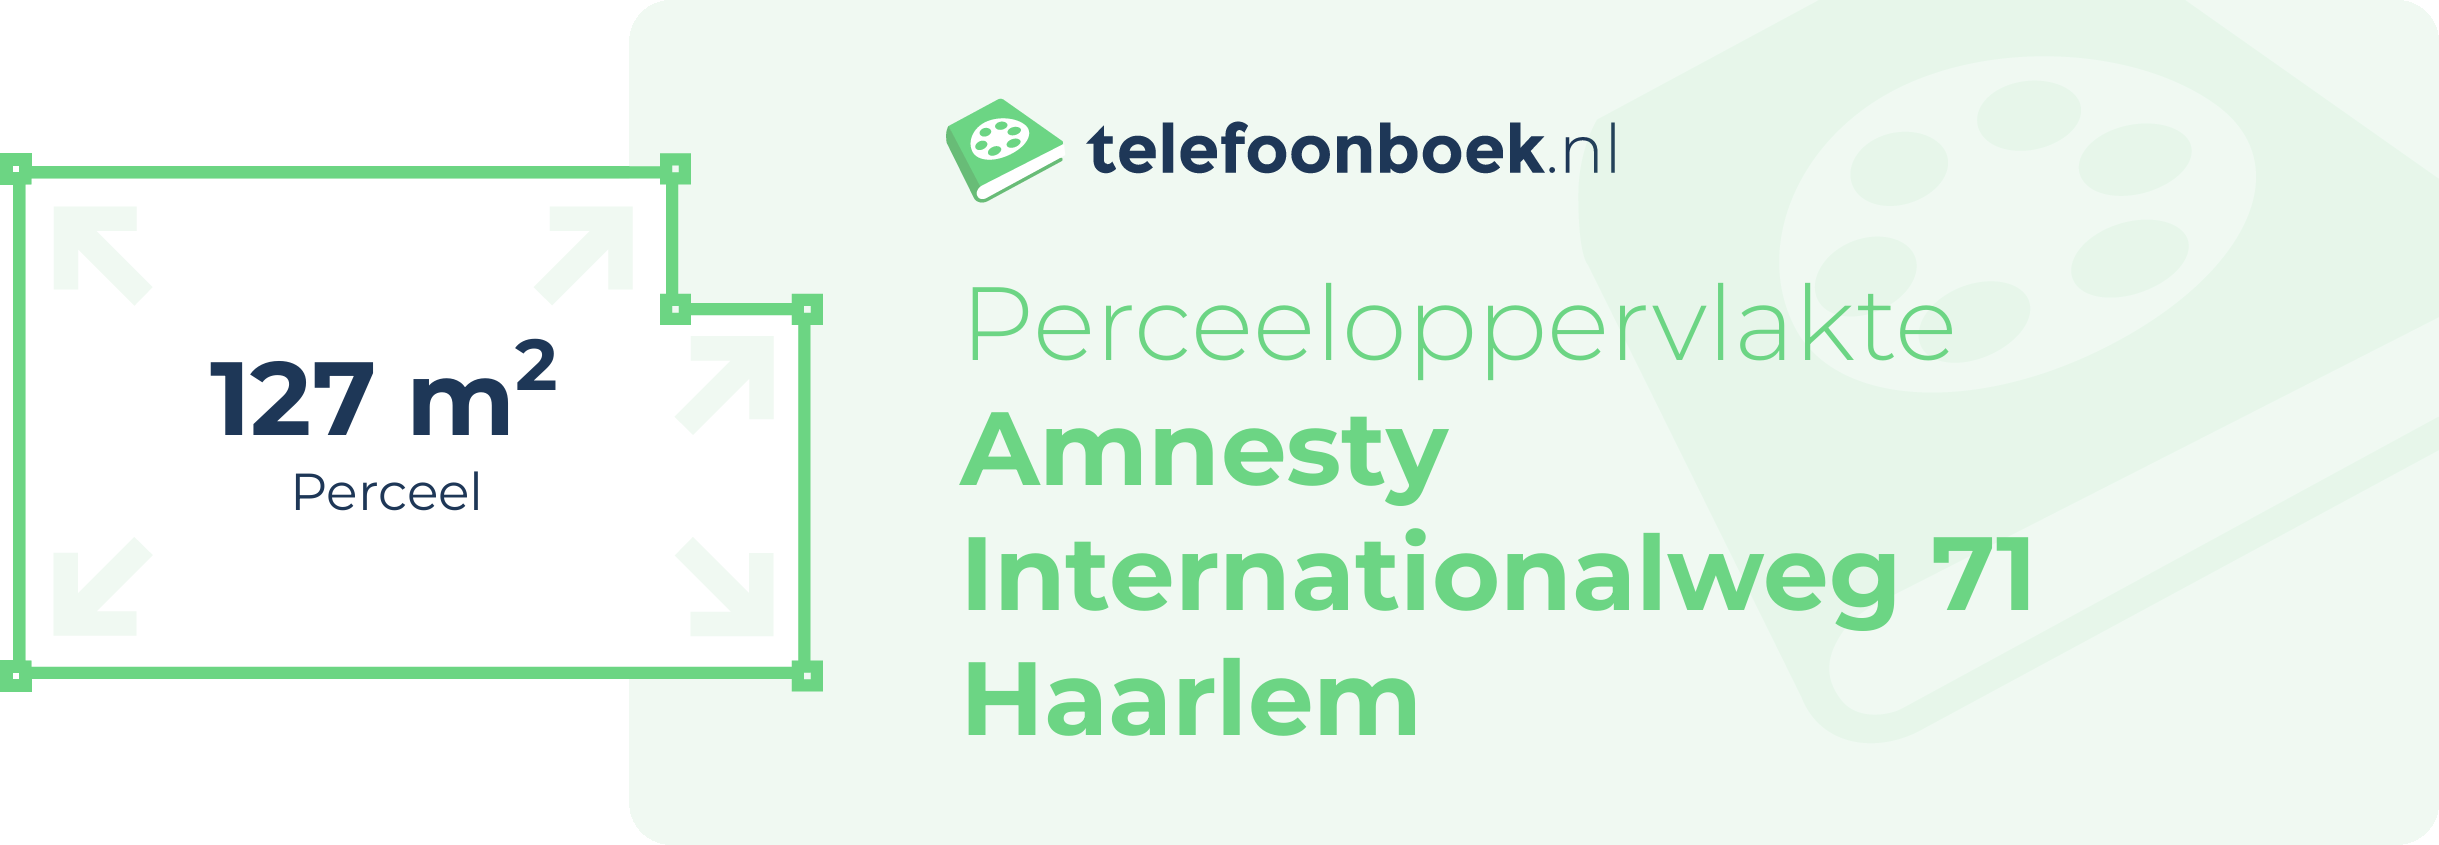 Perceeloppervlakte Amnesty Internationalweg 71 Haarlem